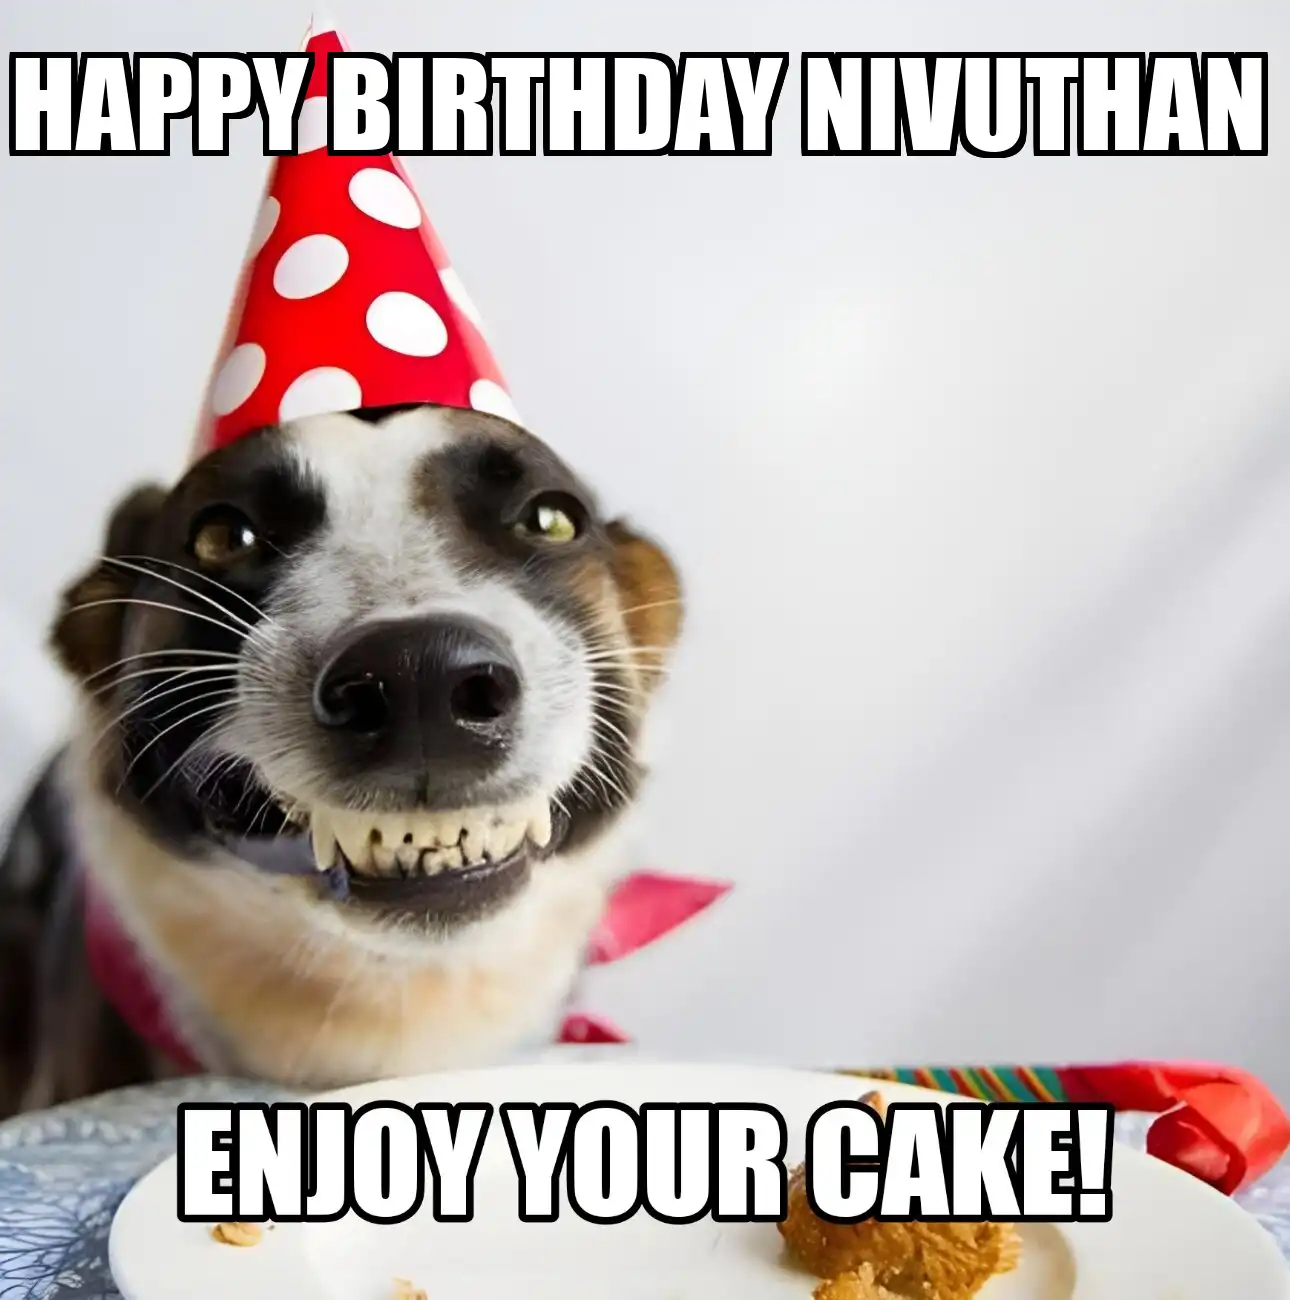 Happy Birthday Nivuthan Enjoy Your Cake Dog Meme